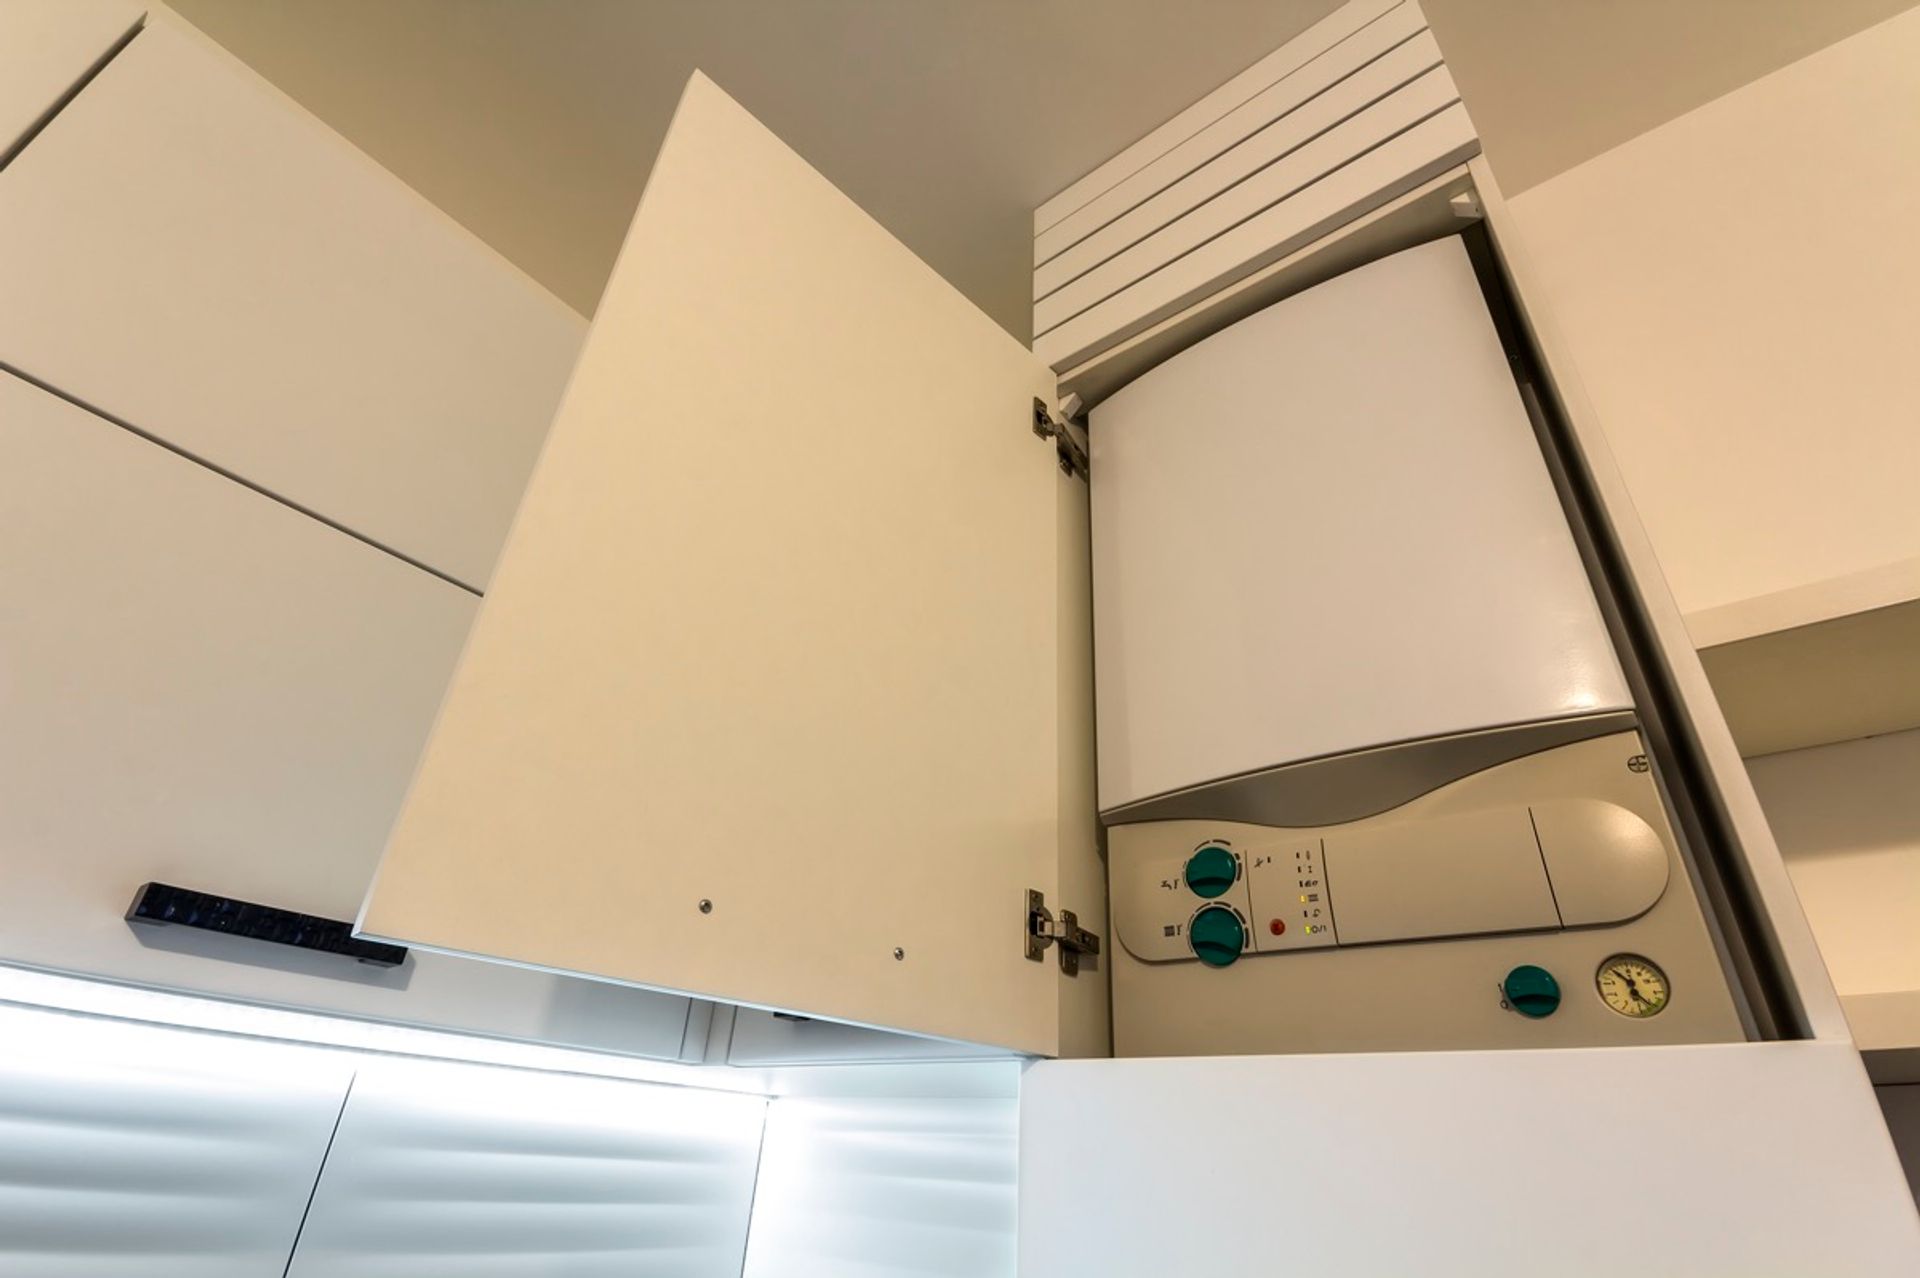 Home Gas Water Heater Boiler In Kitchen Furniture 2023 11 27 05 21 54 Utc